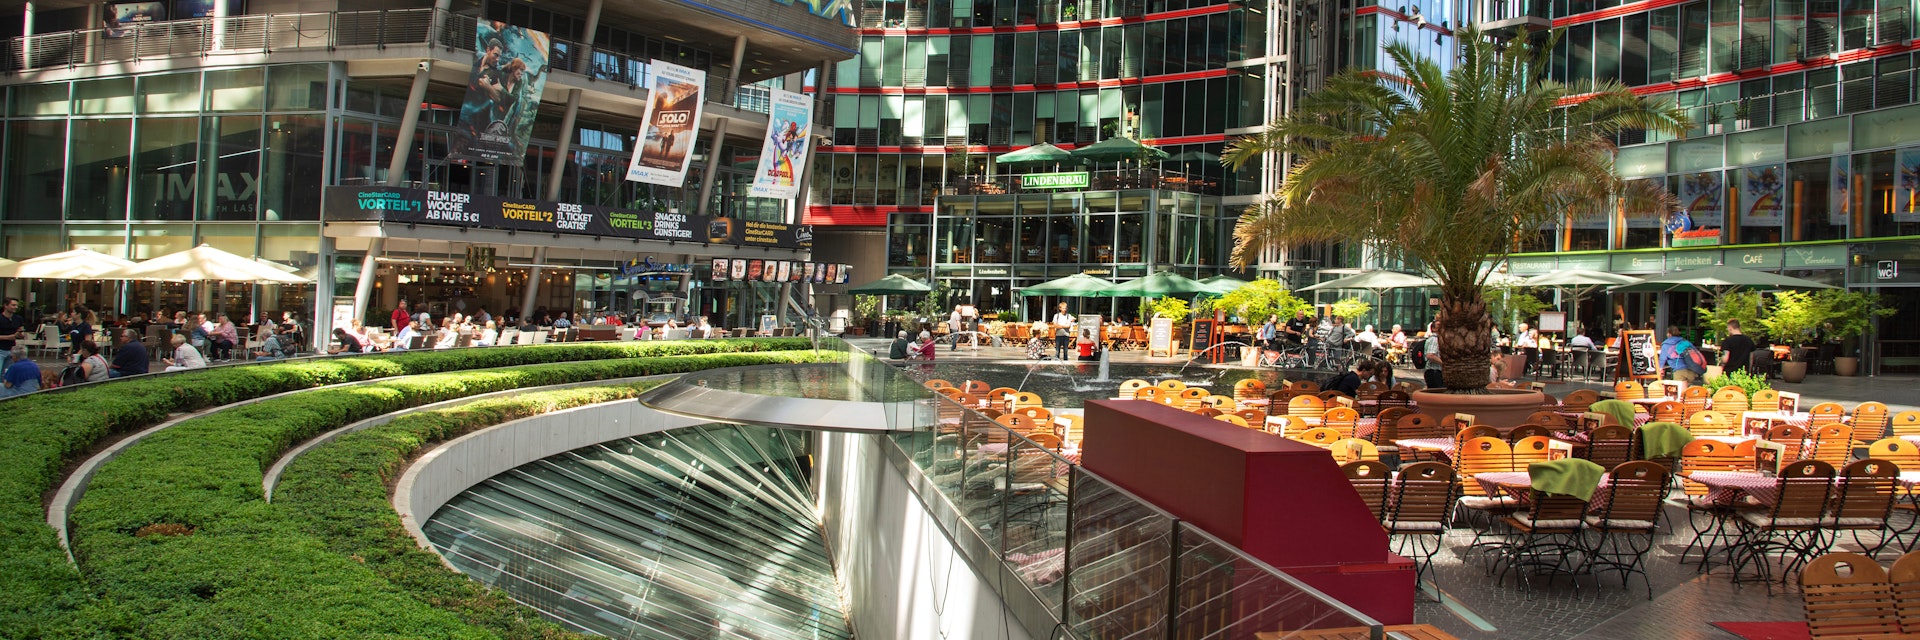 Restaurants and a cinema inside the Sony Center complex at the Potsdamer Platz.